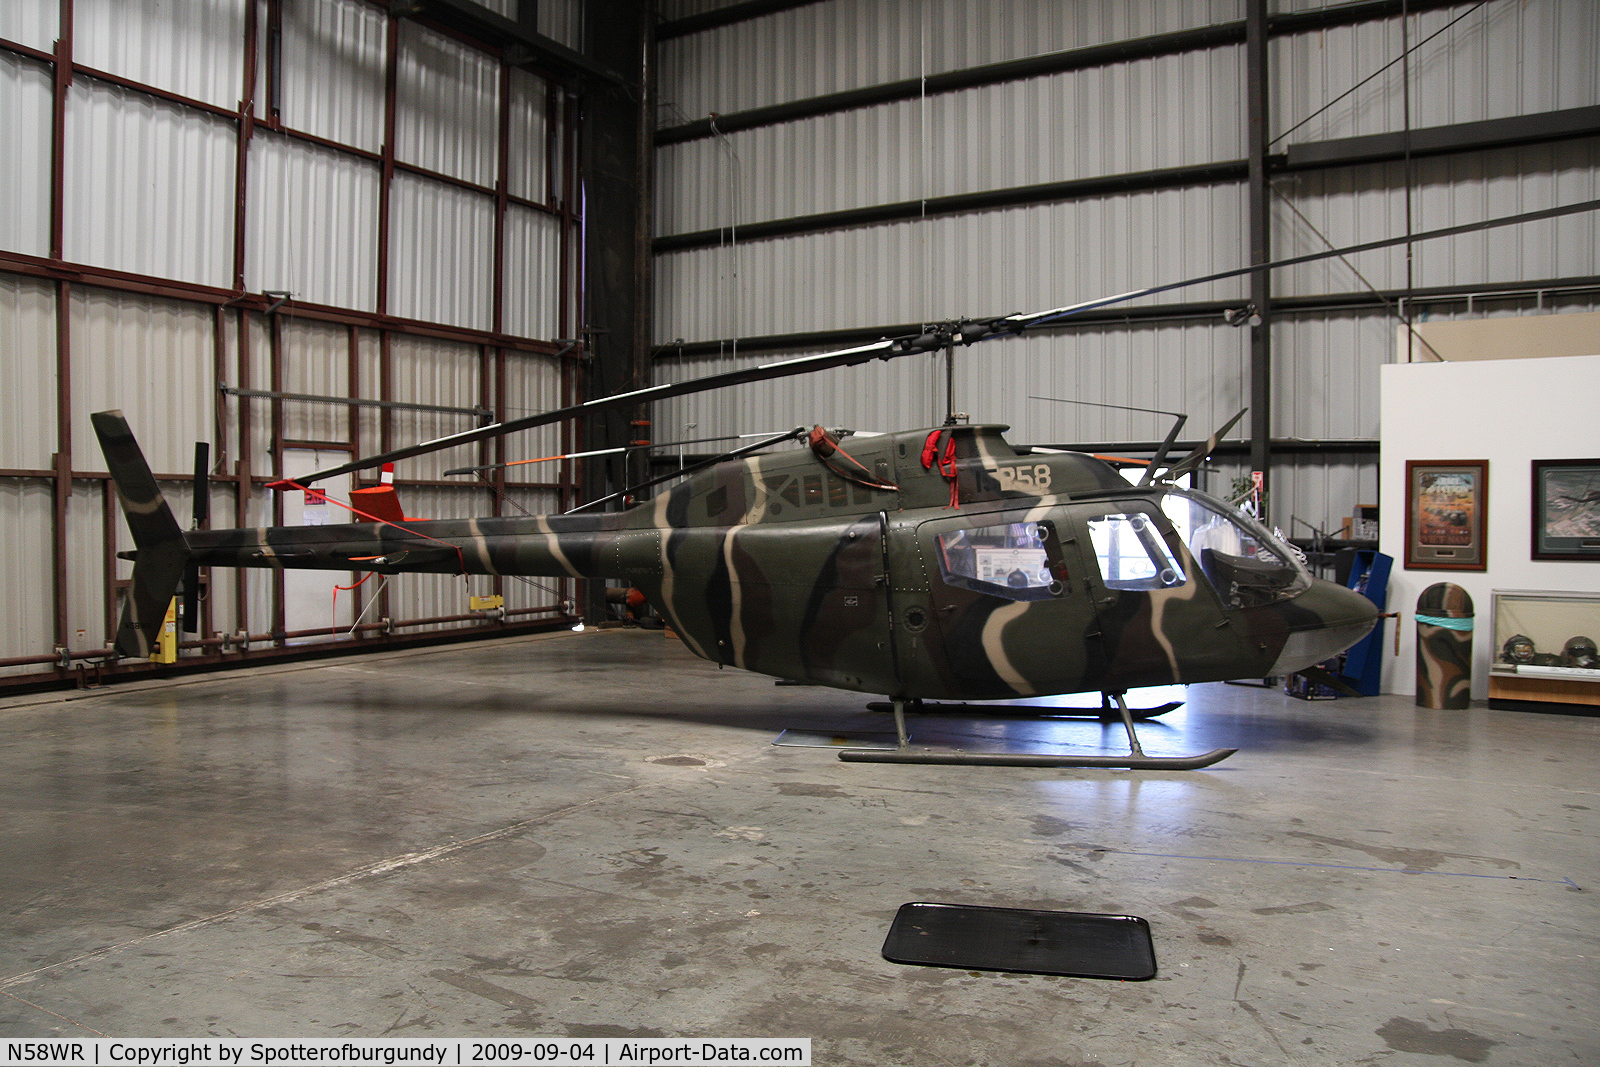 N58WR, 1971 Bell OH-58C C/N 70-15258 (40809), Taken at Murietta airport